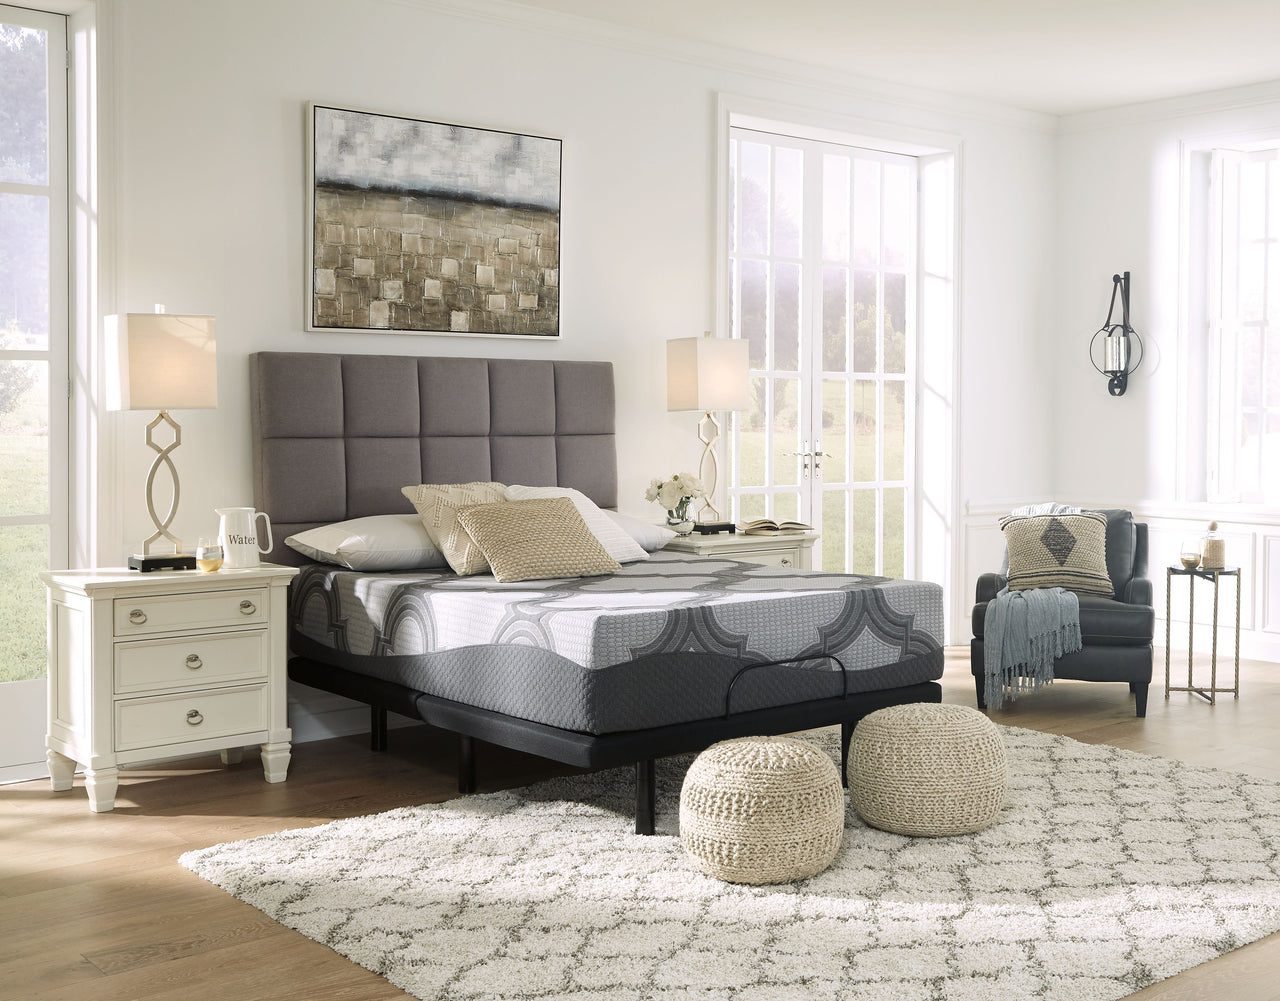 Ashley Sleep - Hybrid Mattress With Adjustable Base Tony's Home Furnishings Furniture. Beds. Dressers. Sofas.